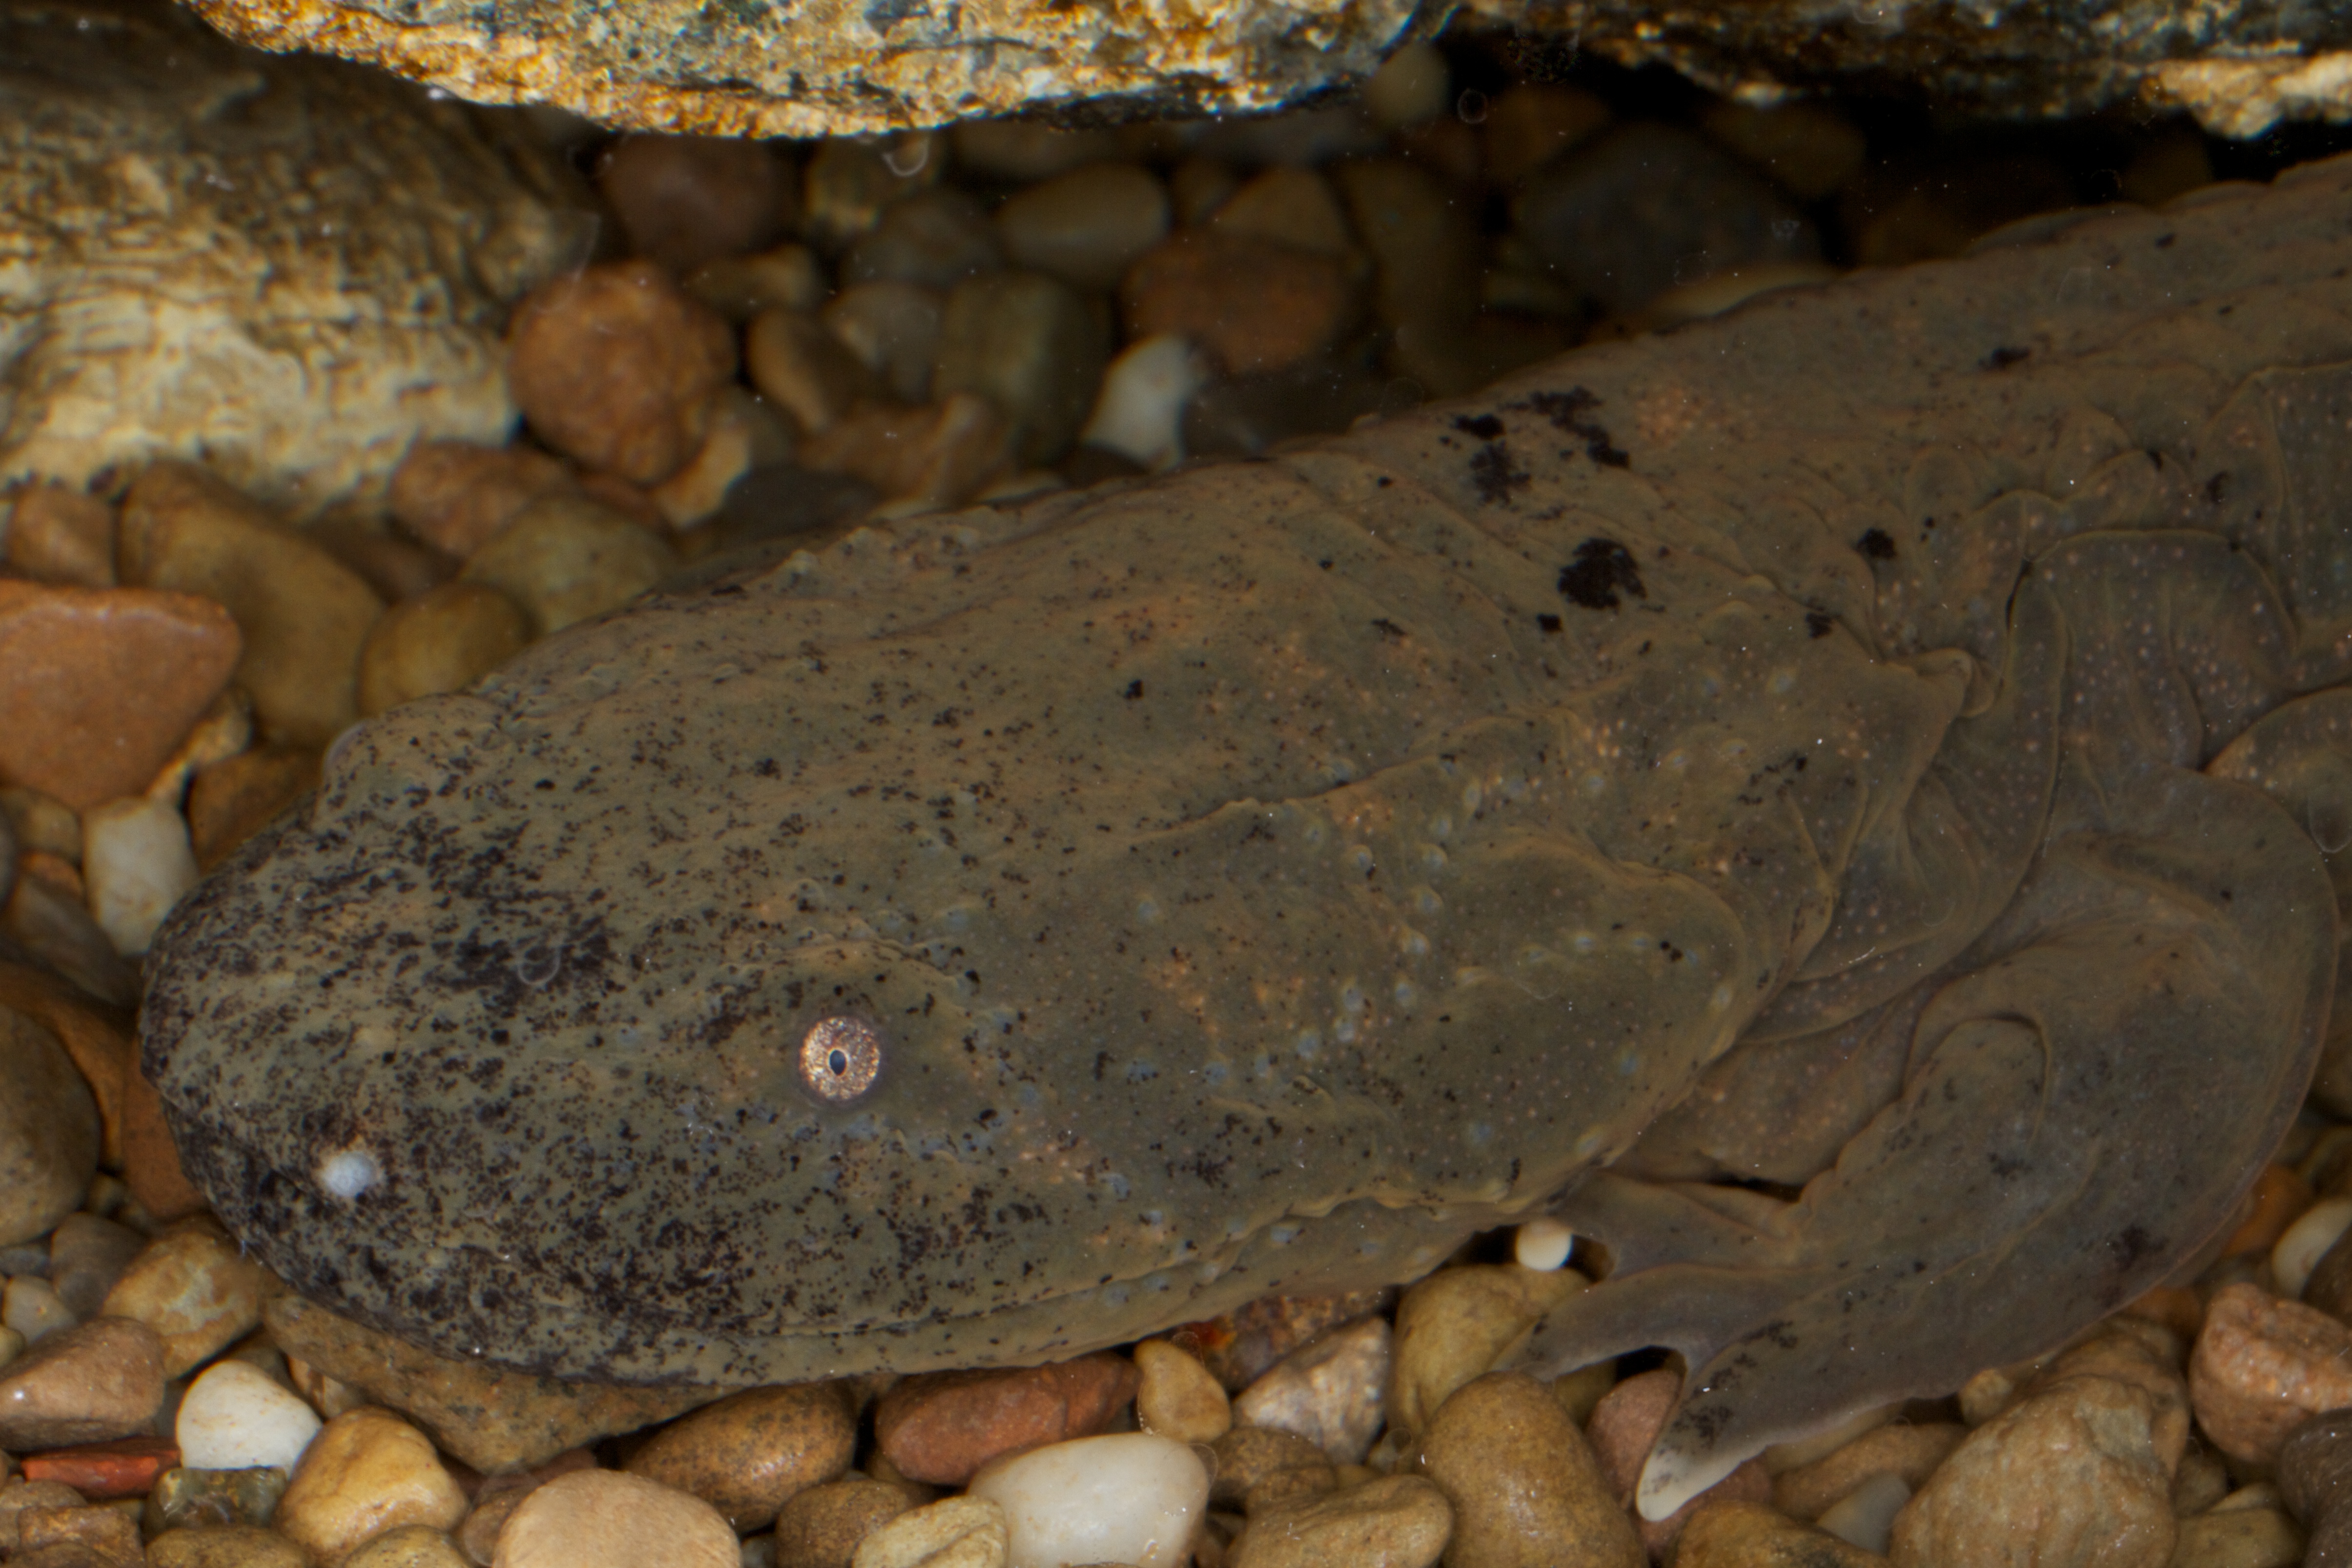 Head of a large brown salamander.